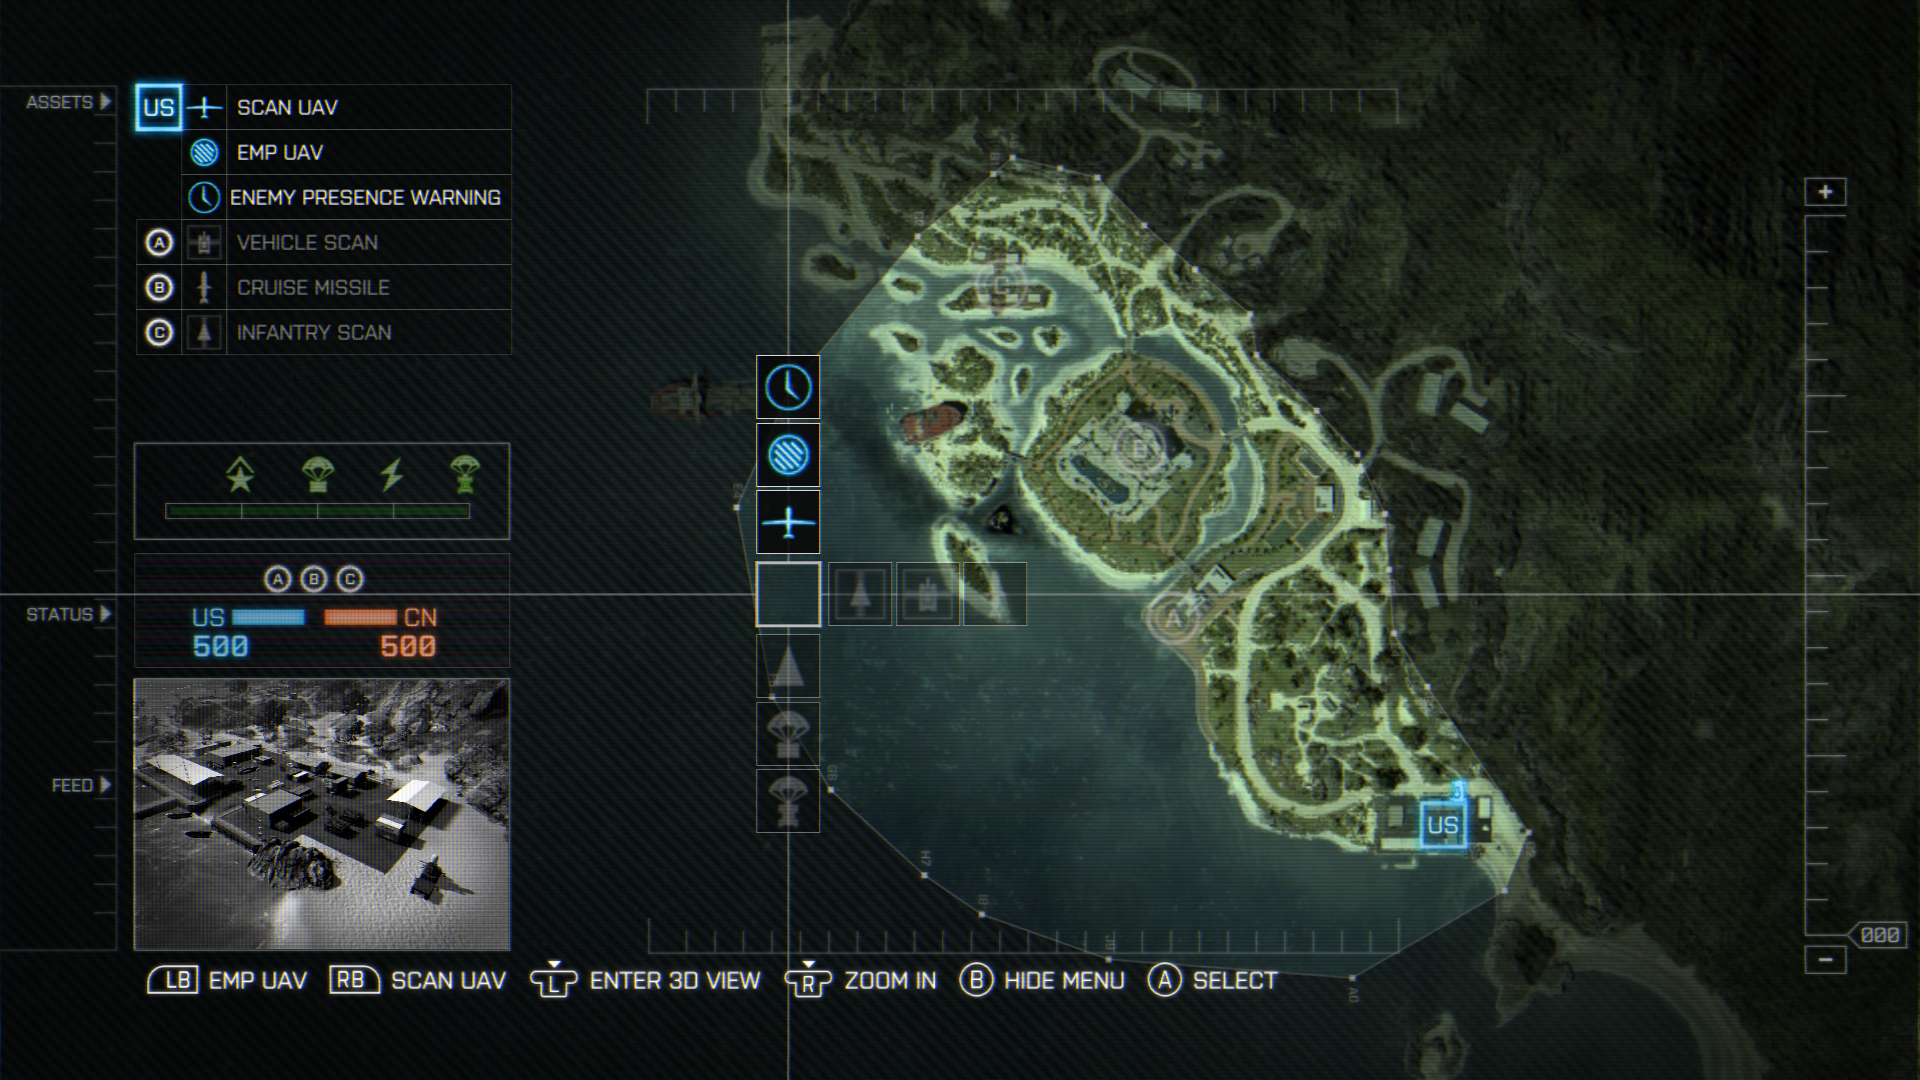 Battlefield 4, Battlelog, Commander App and Missions